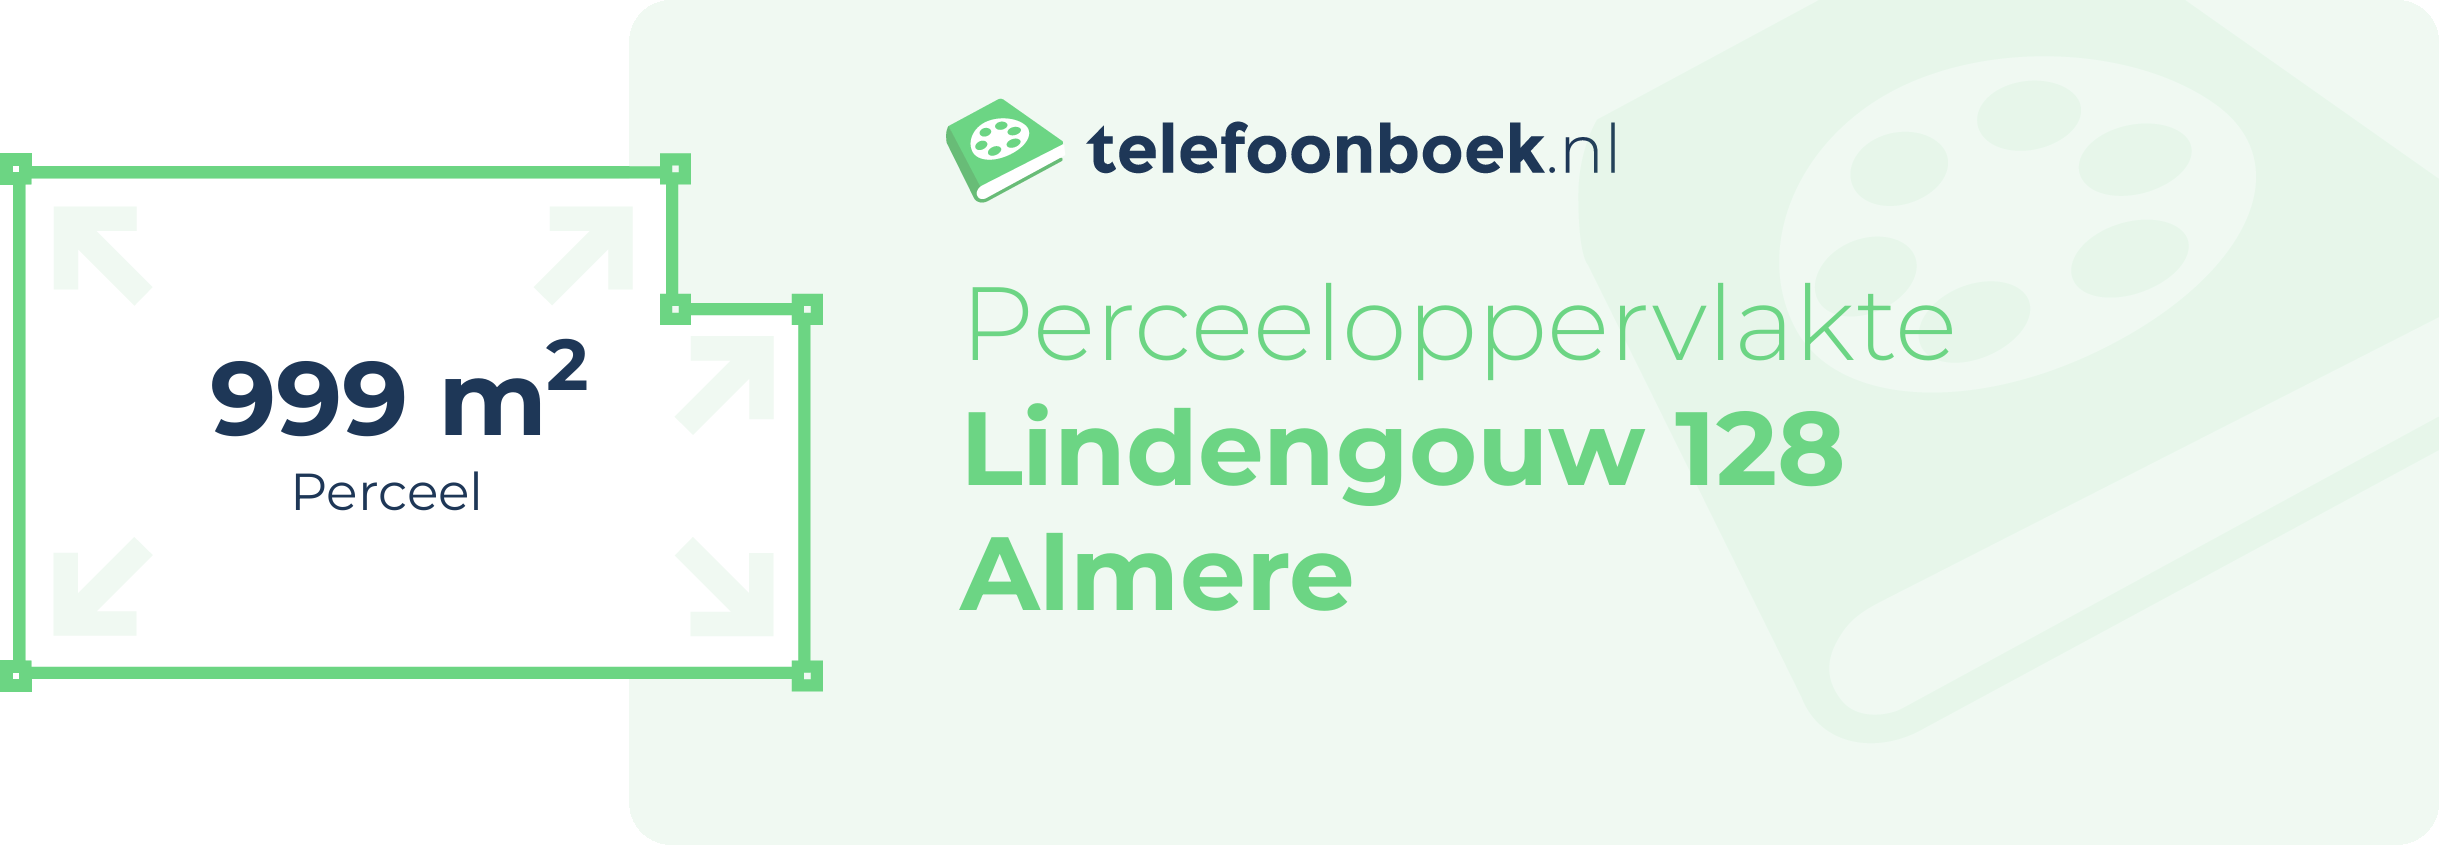 Perceeloppervlakte Lindengouw 128 Almere